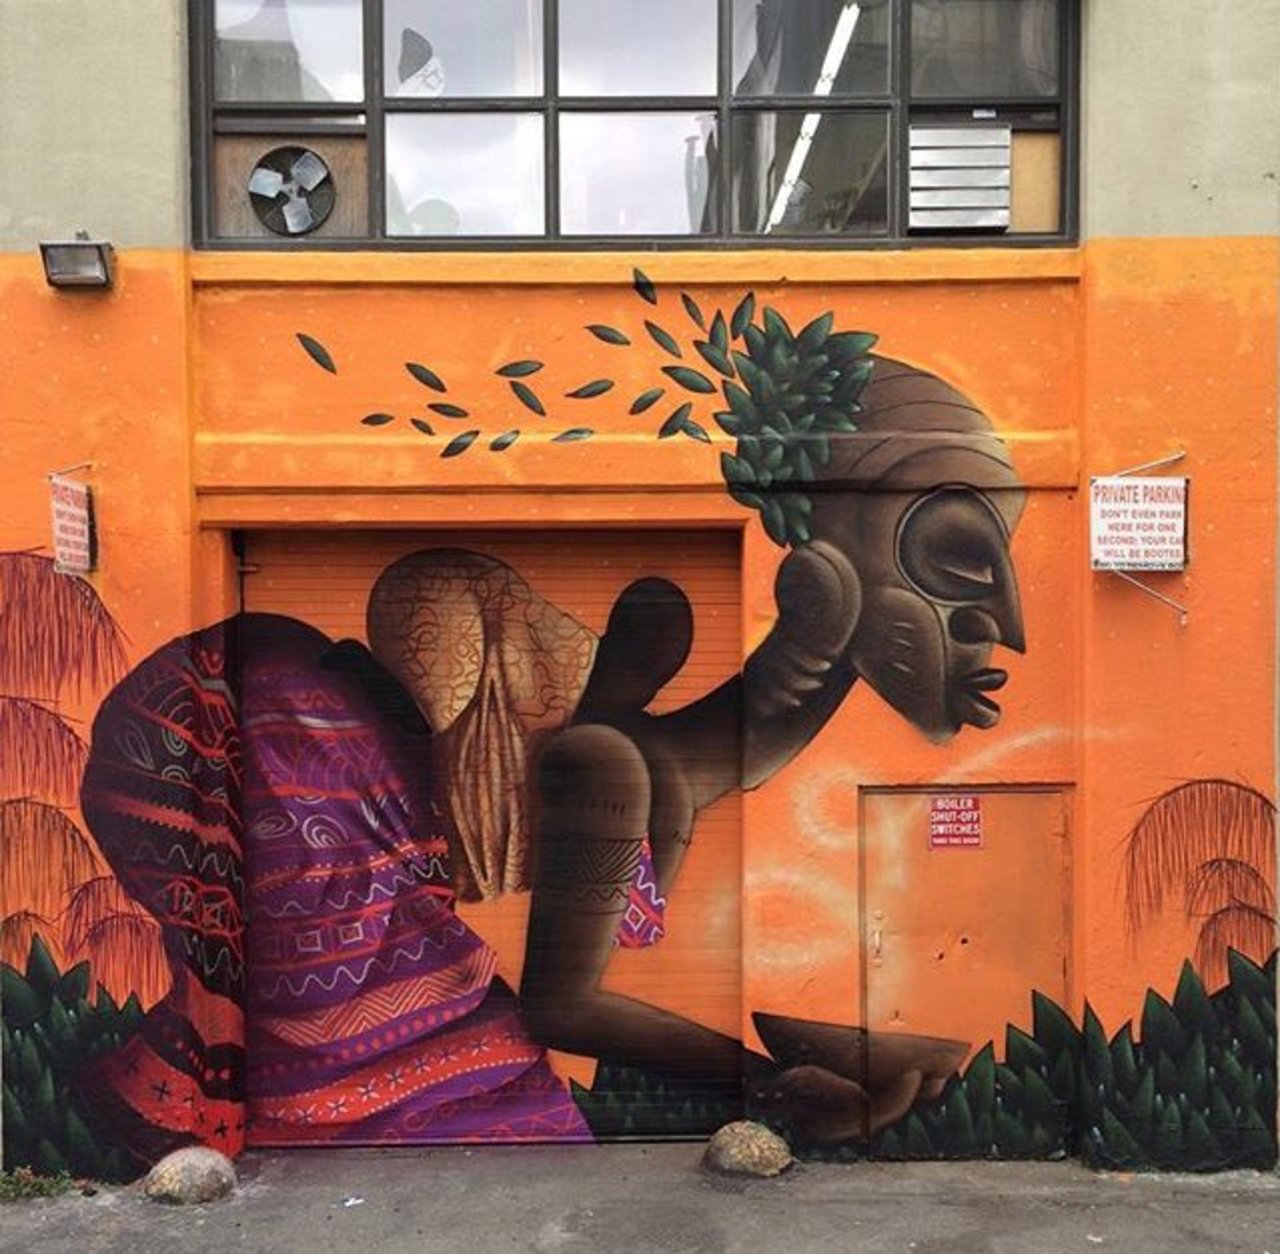 New Street Art by Alexandre Keto in NYC 

#art #graffiti #mural #streetart https://t.co/EcivhCZmZl